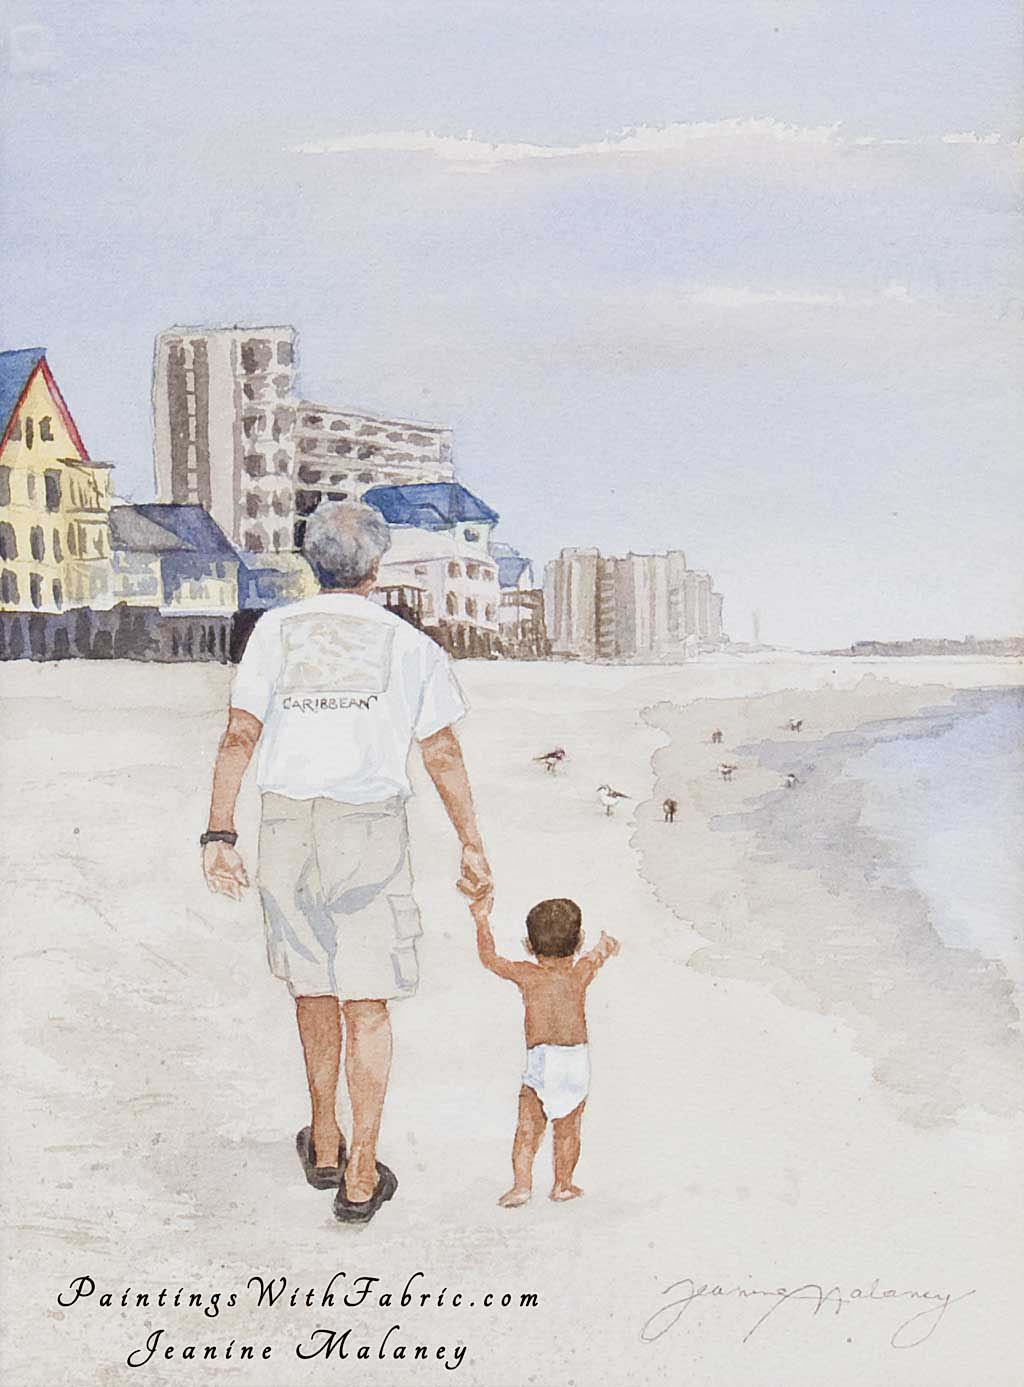 Van and Cruz Unframed Original Watercolor Painting of grandfather and grandson walking Florida beach